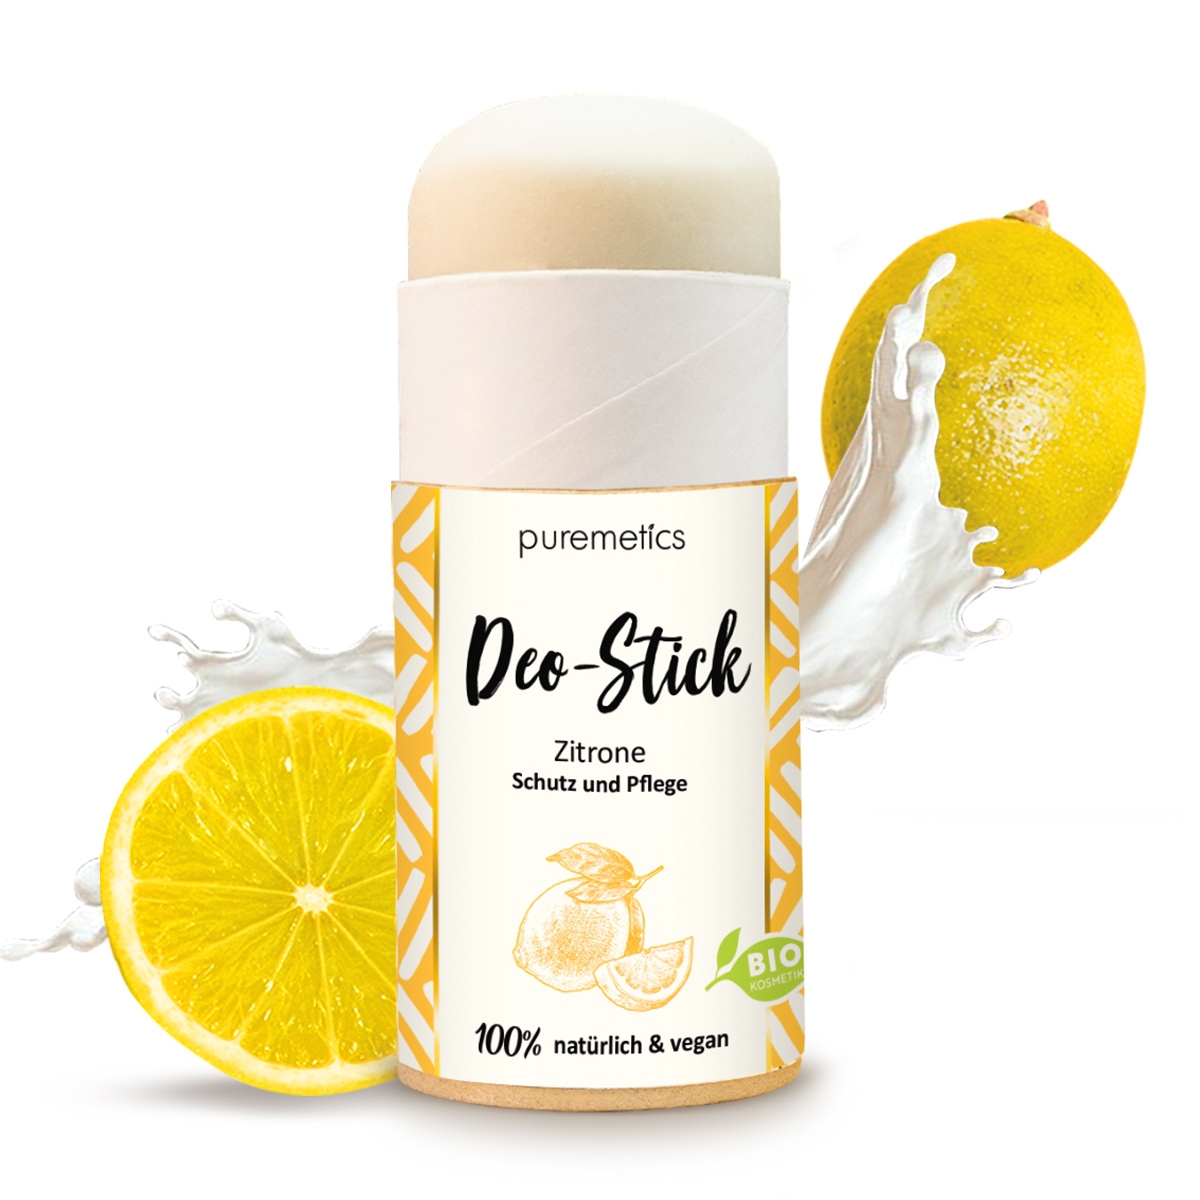 Deo-Stick Zitrone